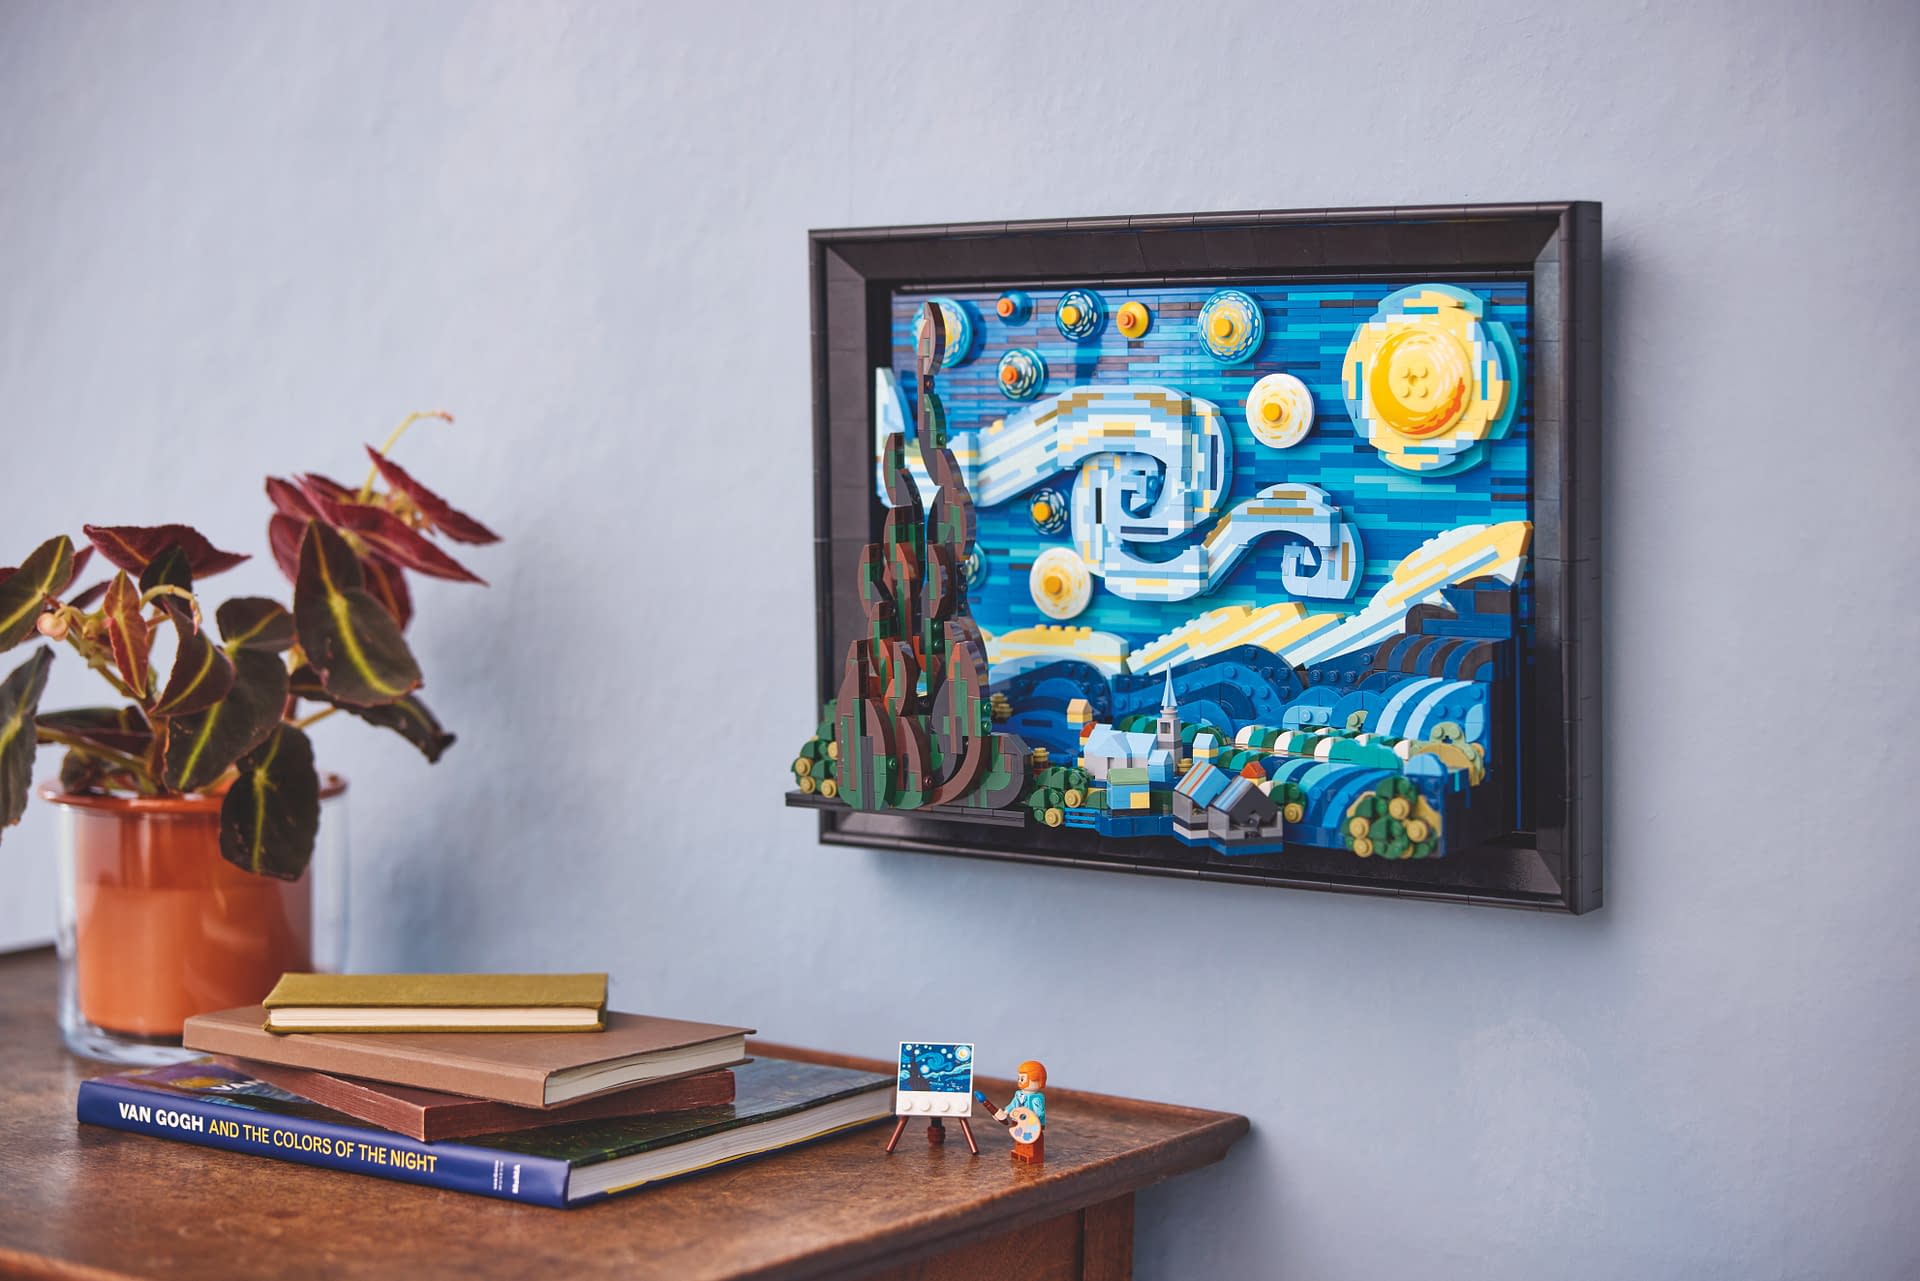 LEGO Unveils Vincent van Gogh The Starry Night 2,316 Piece IDEAS Set